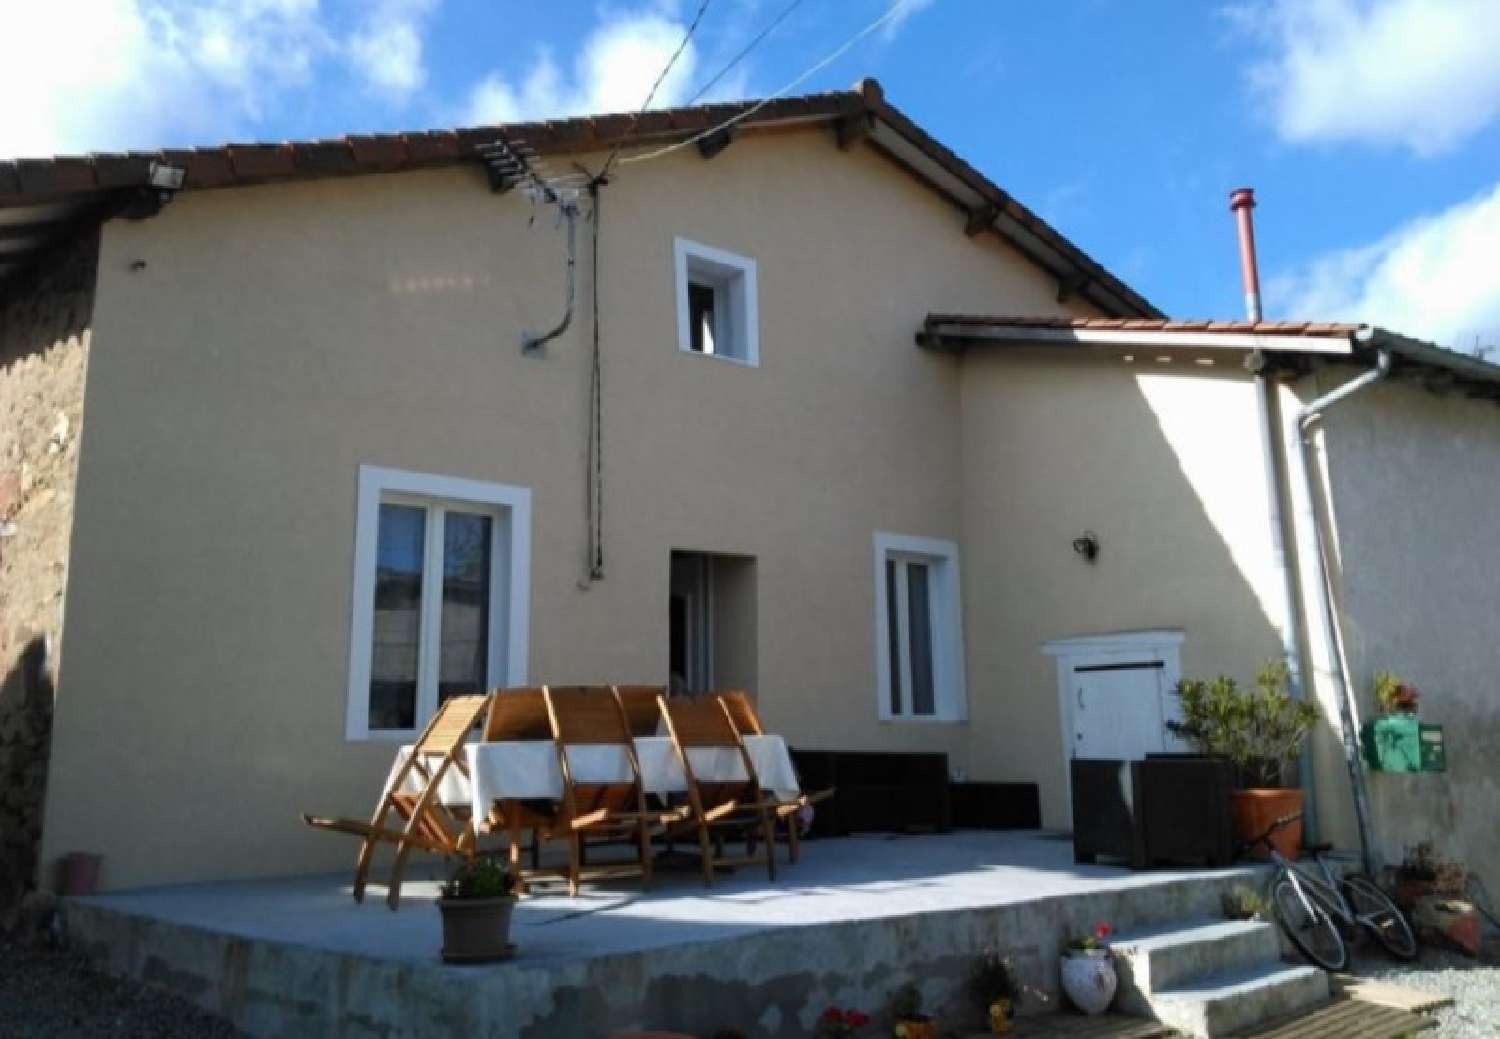  for sale village house Saulgond Charente 1